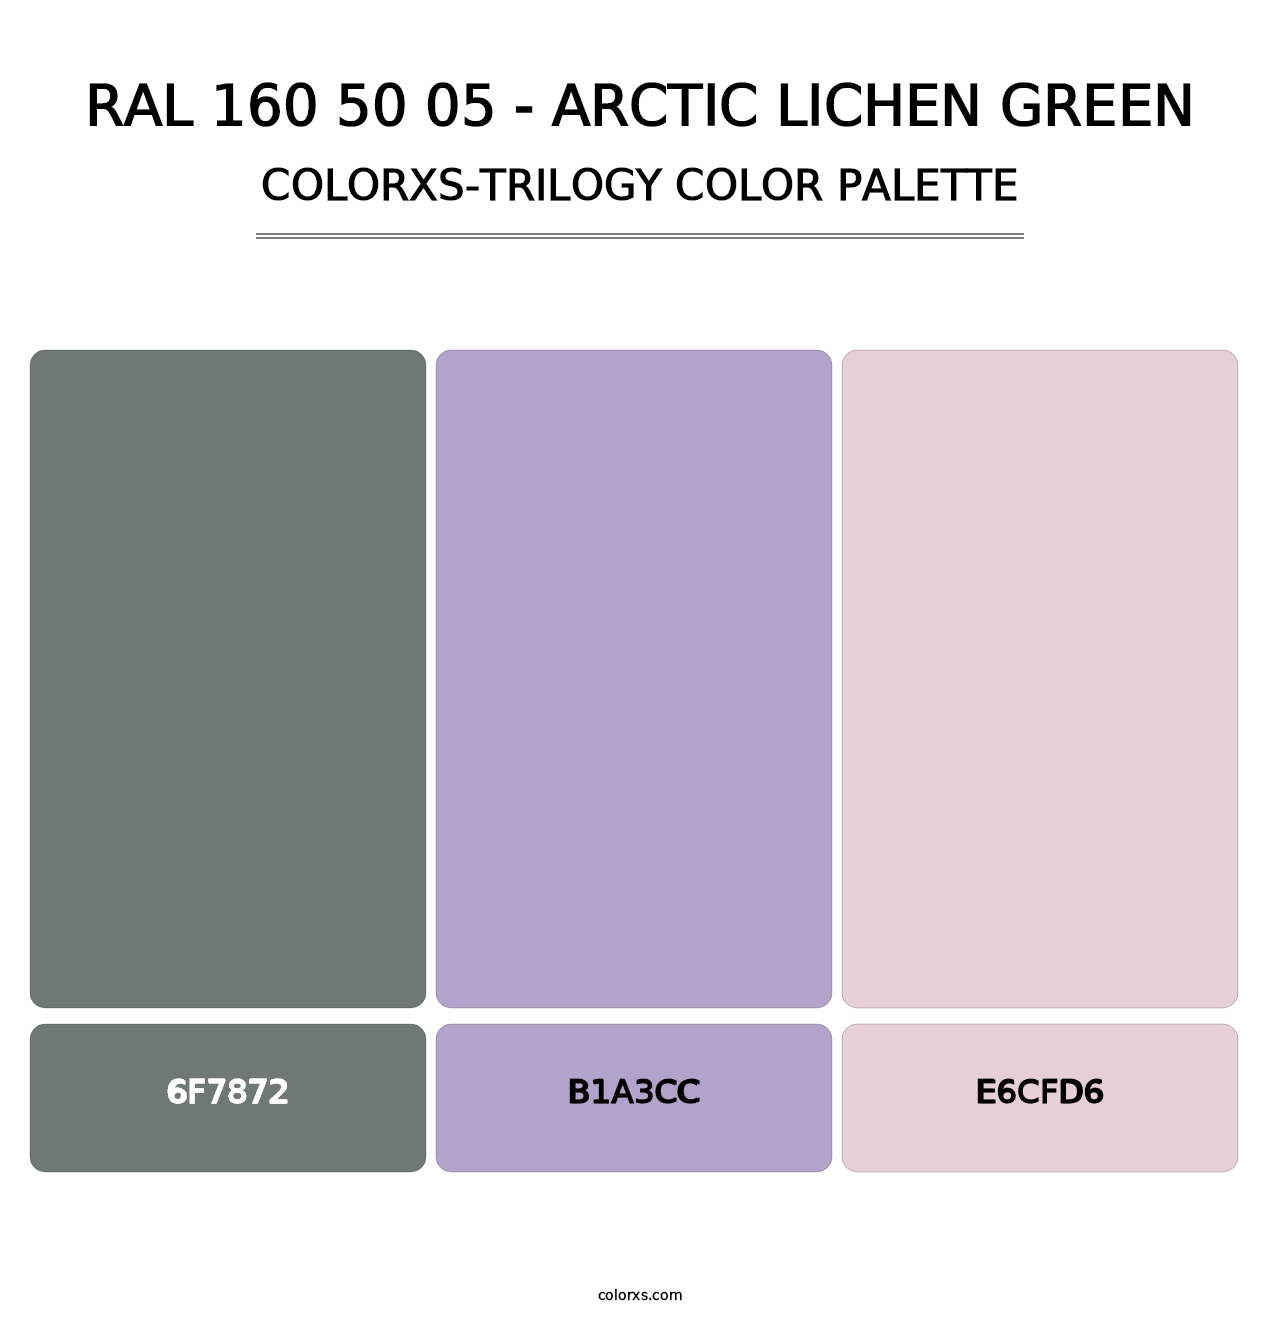 RAL 160 50 05 - Arctic Lichen Green - Colorxs Trilogy Palette